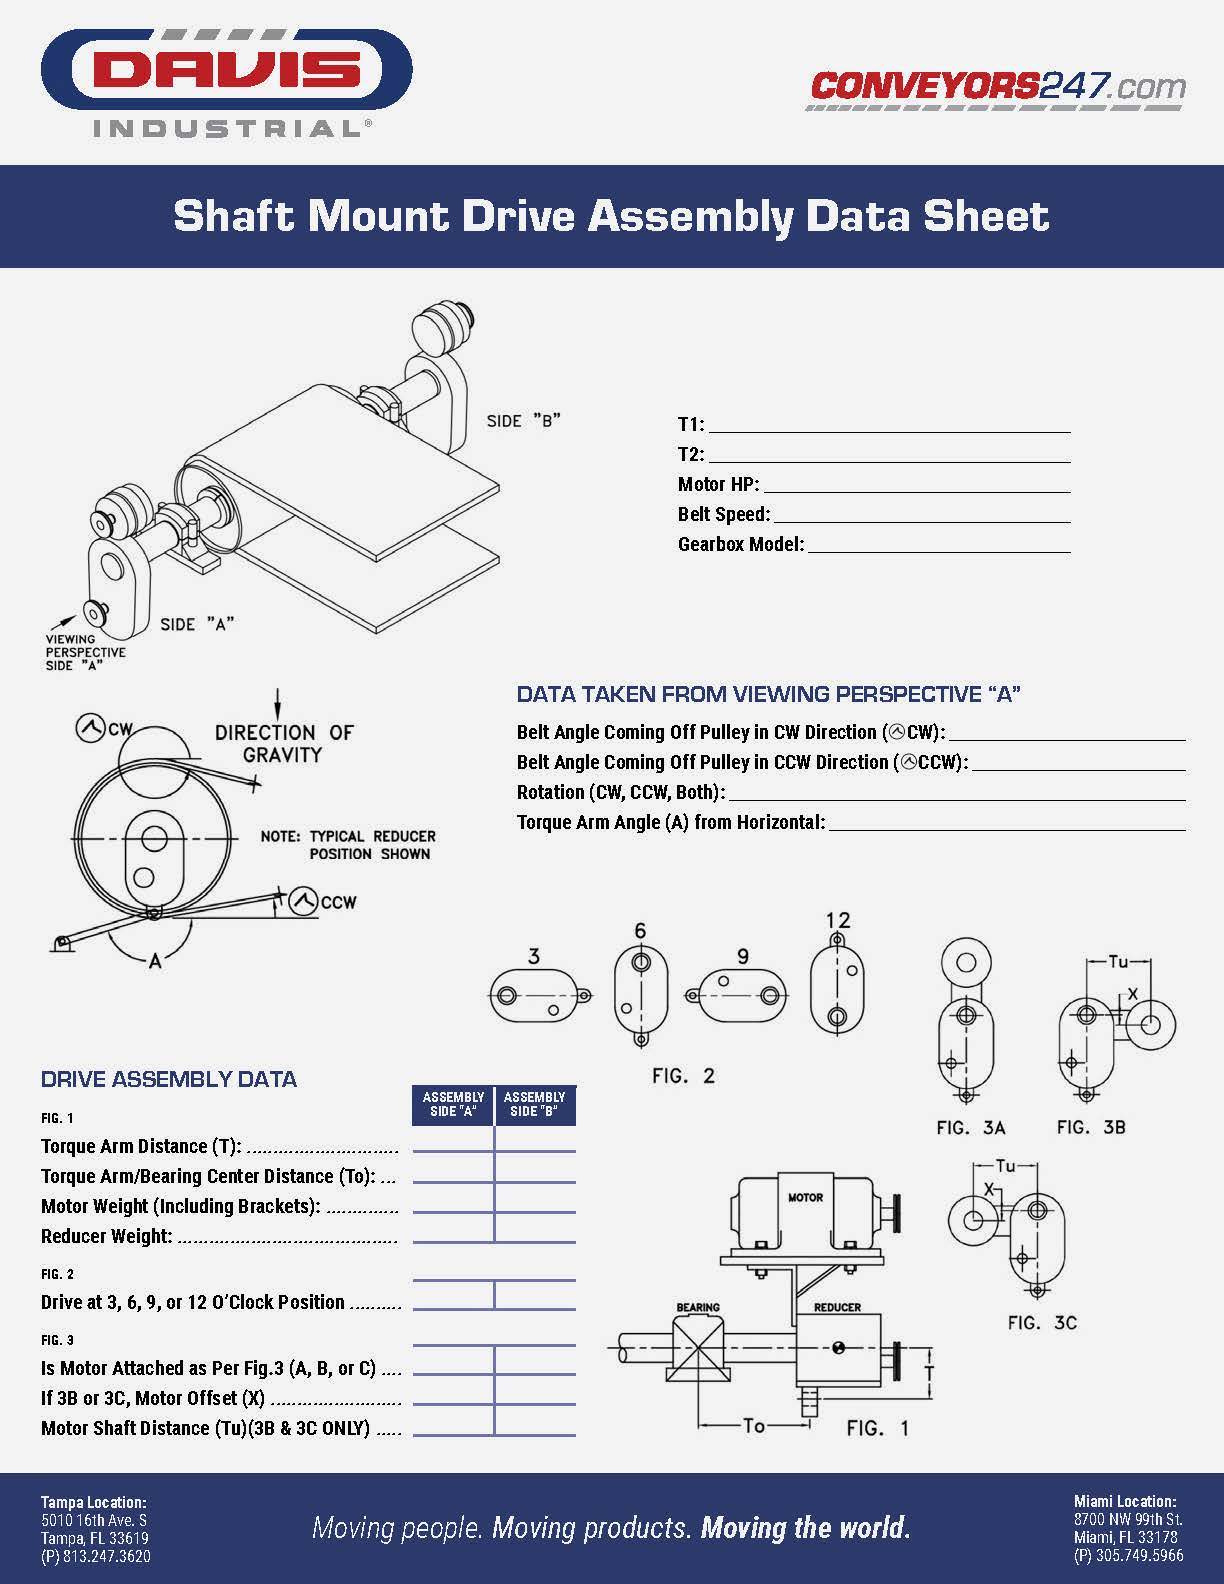 Davis_Overhung Loads - Shaft Mount Drive Assembly